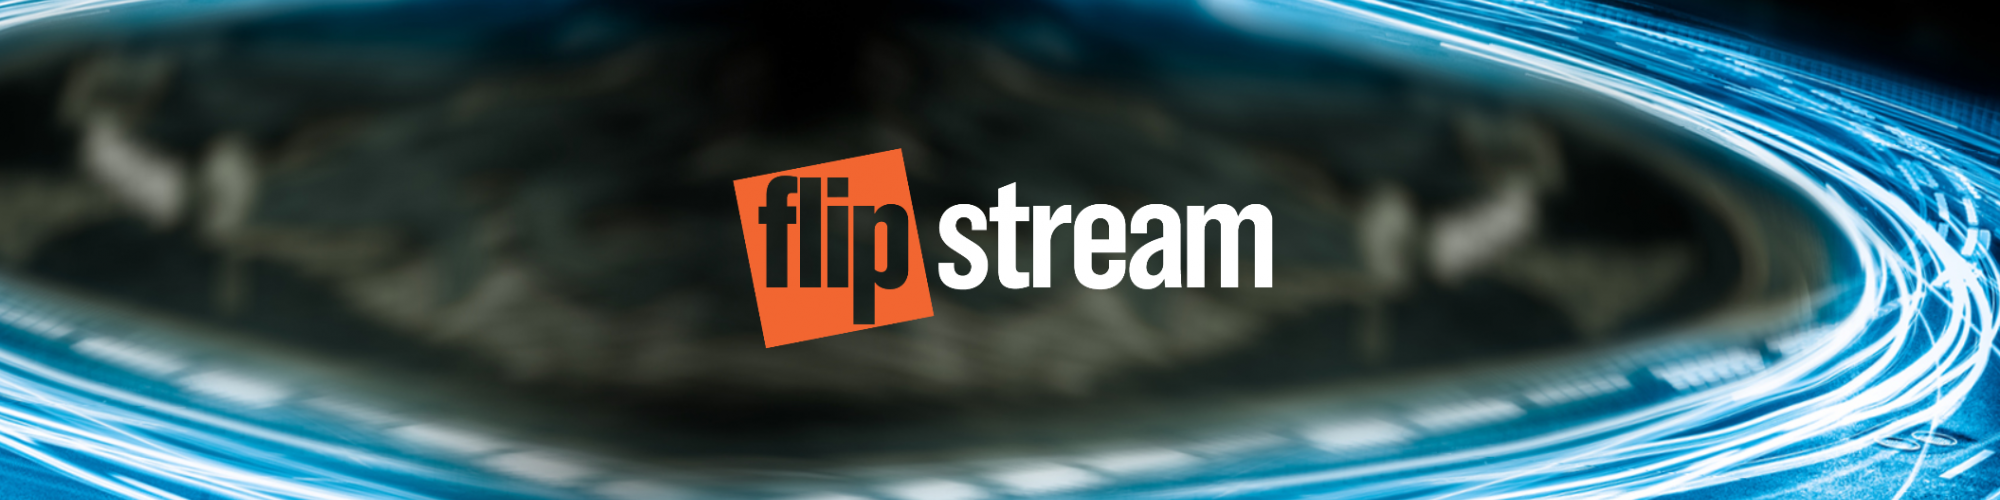 Flip stream banner